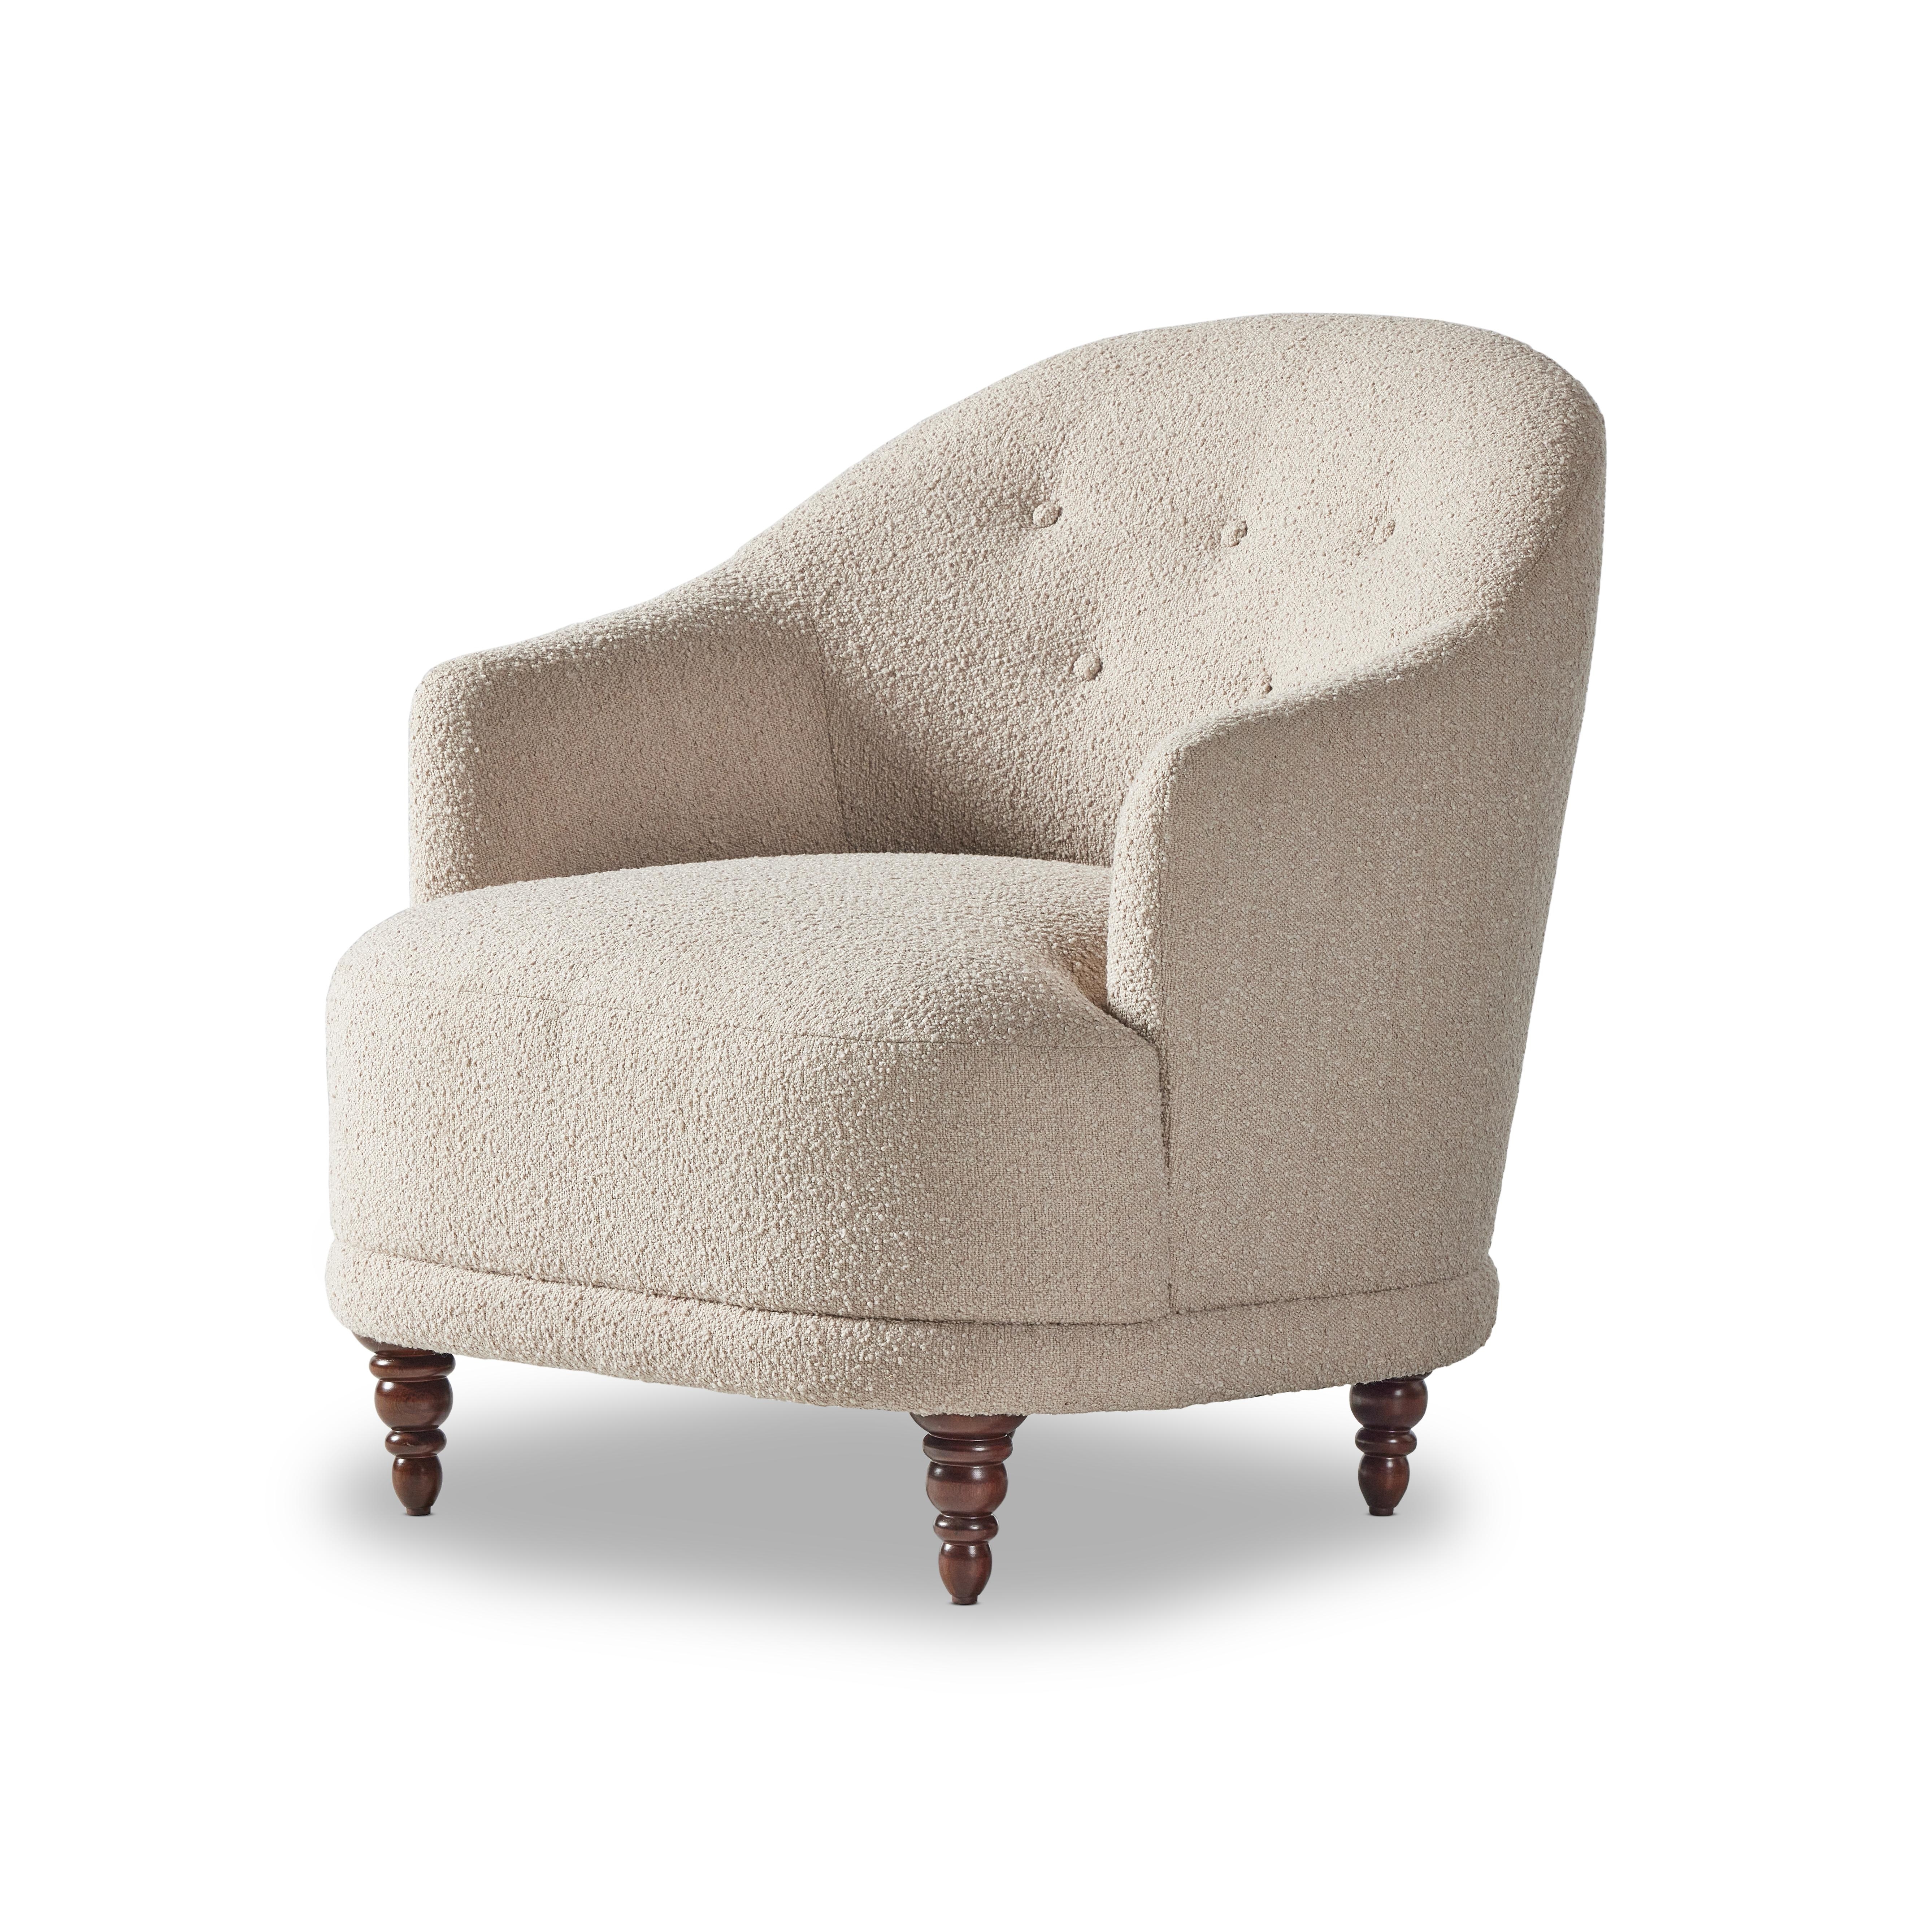 Marnie Chair-Knoll Sand - Image 0